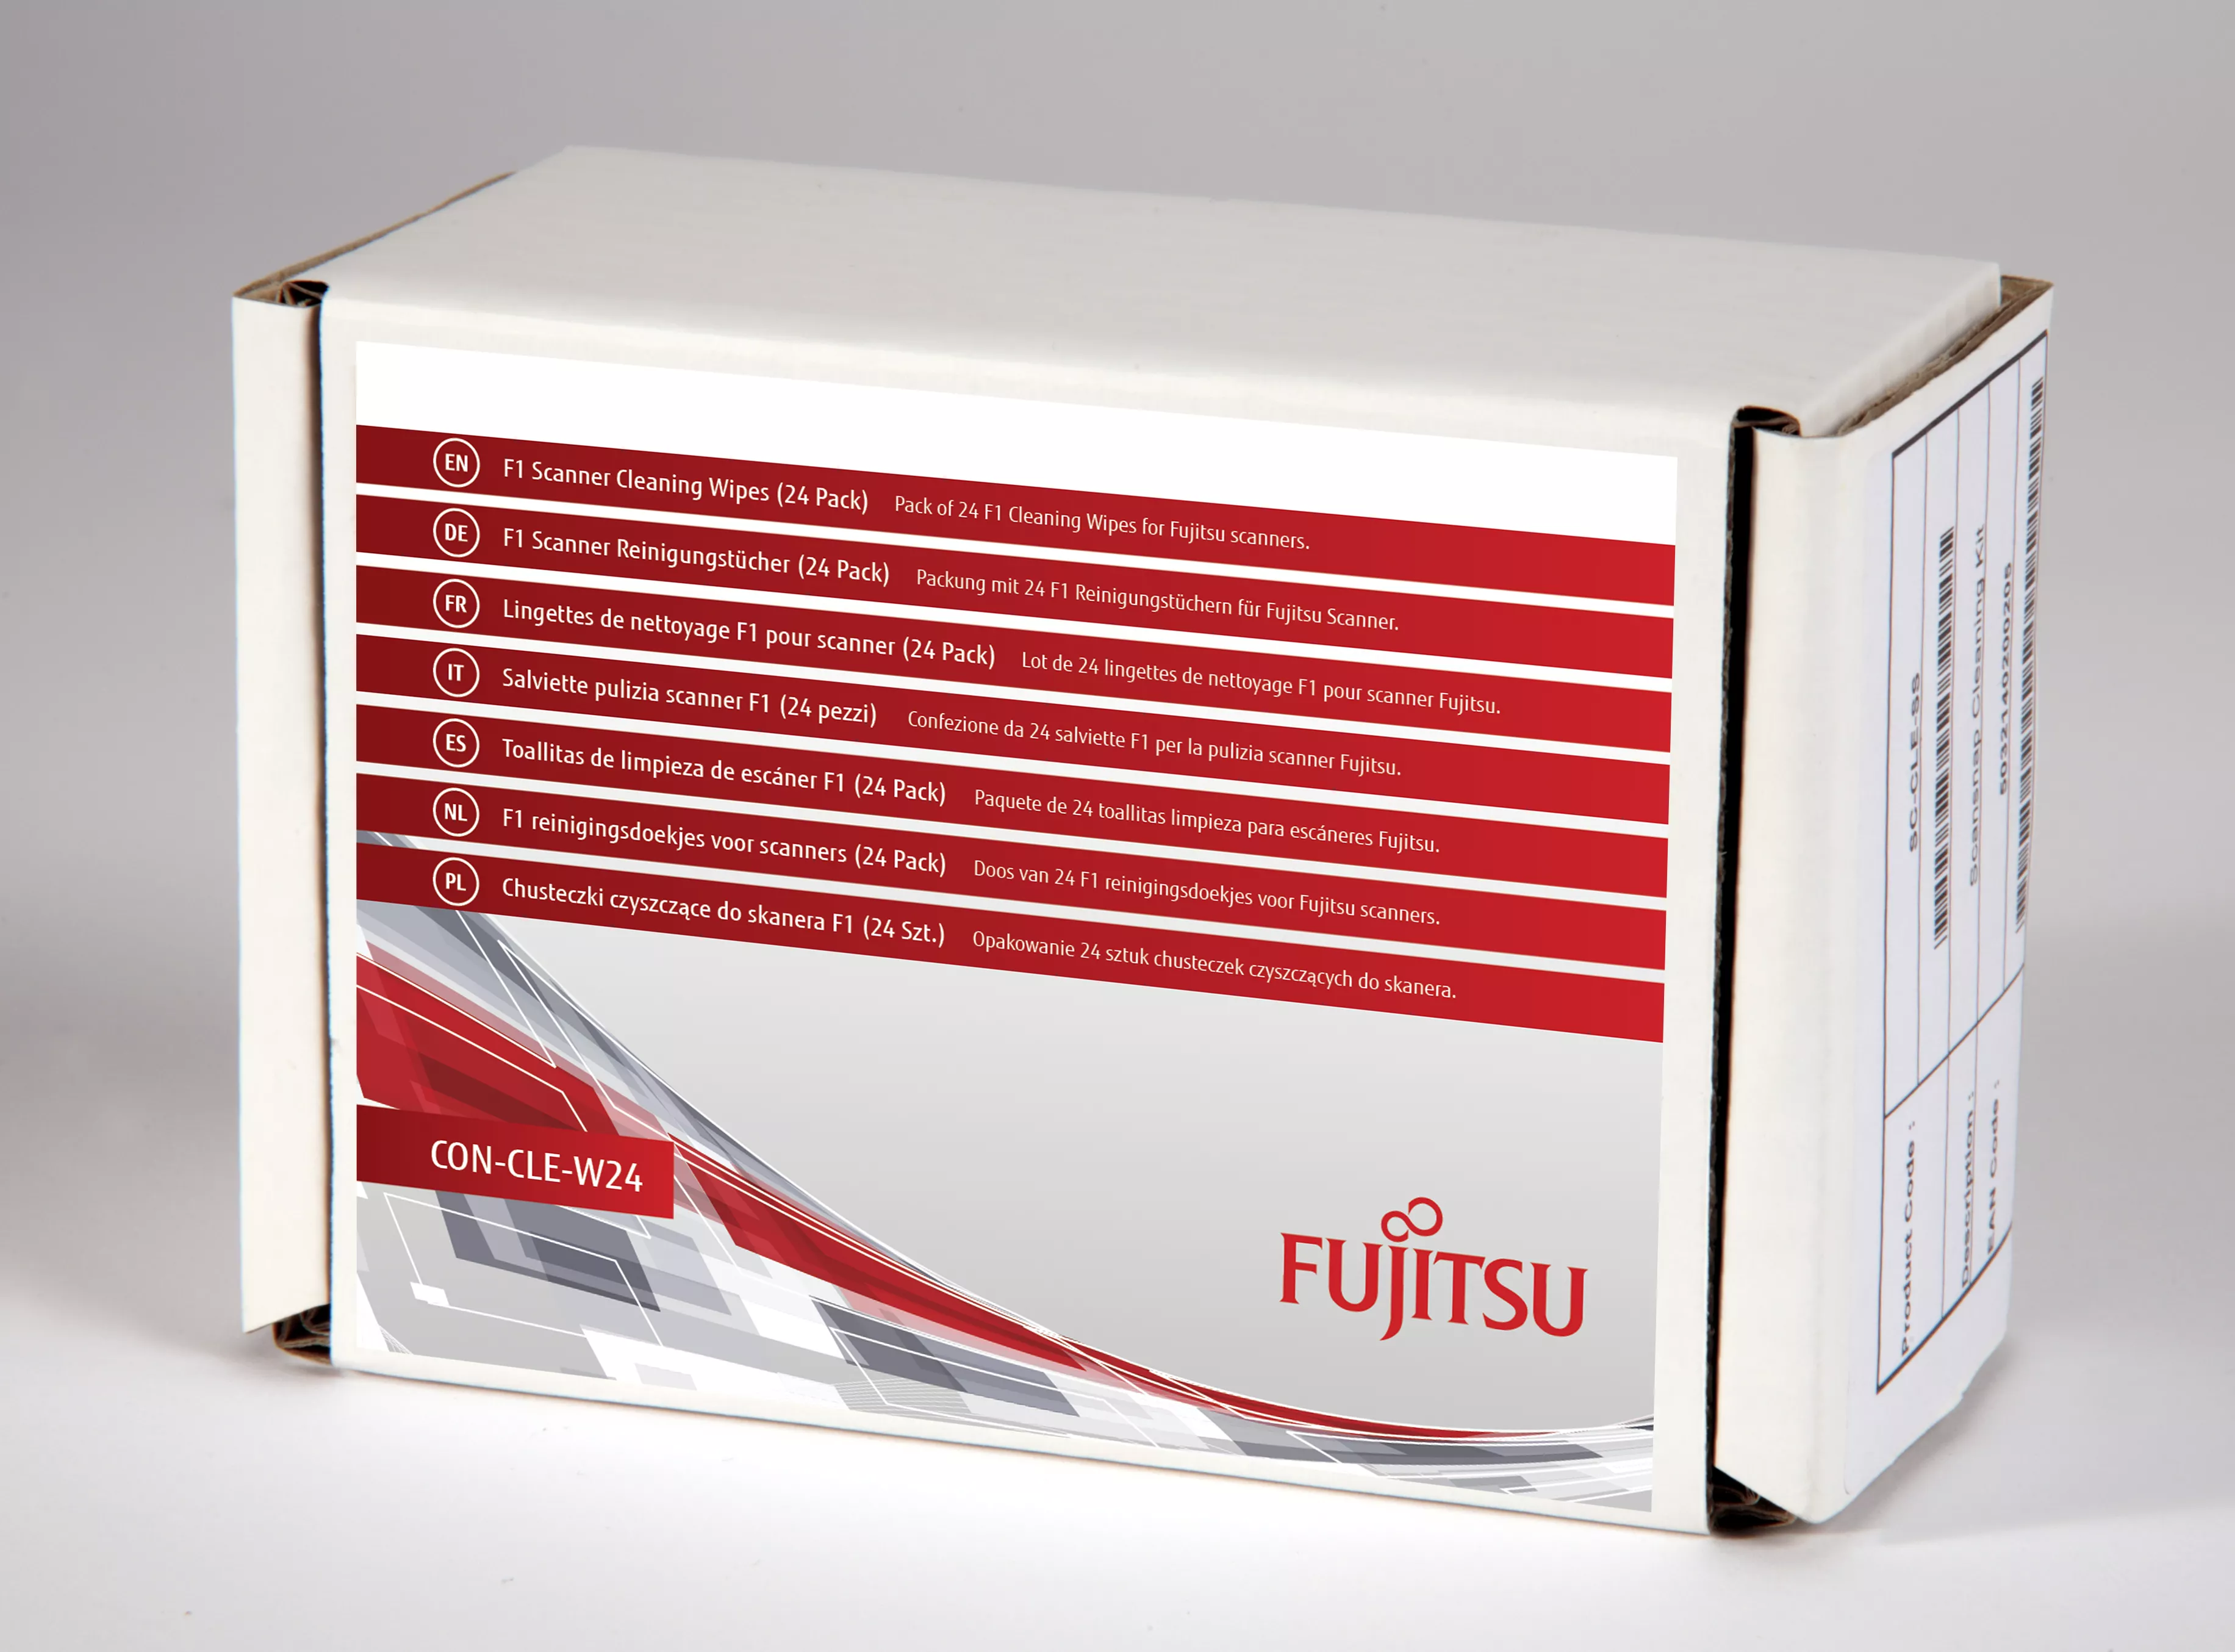 Achat FUJITSU Pack of 24 F1 Cleaning Wipes for Fujitsu scanners au meilleur prix